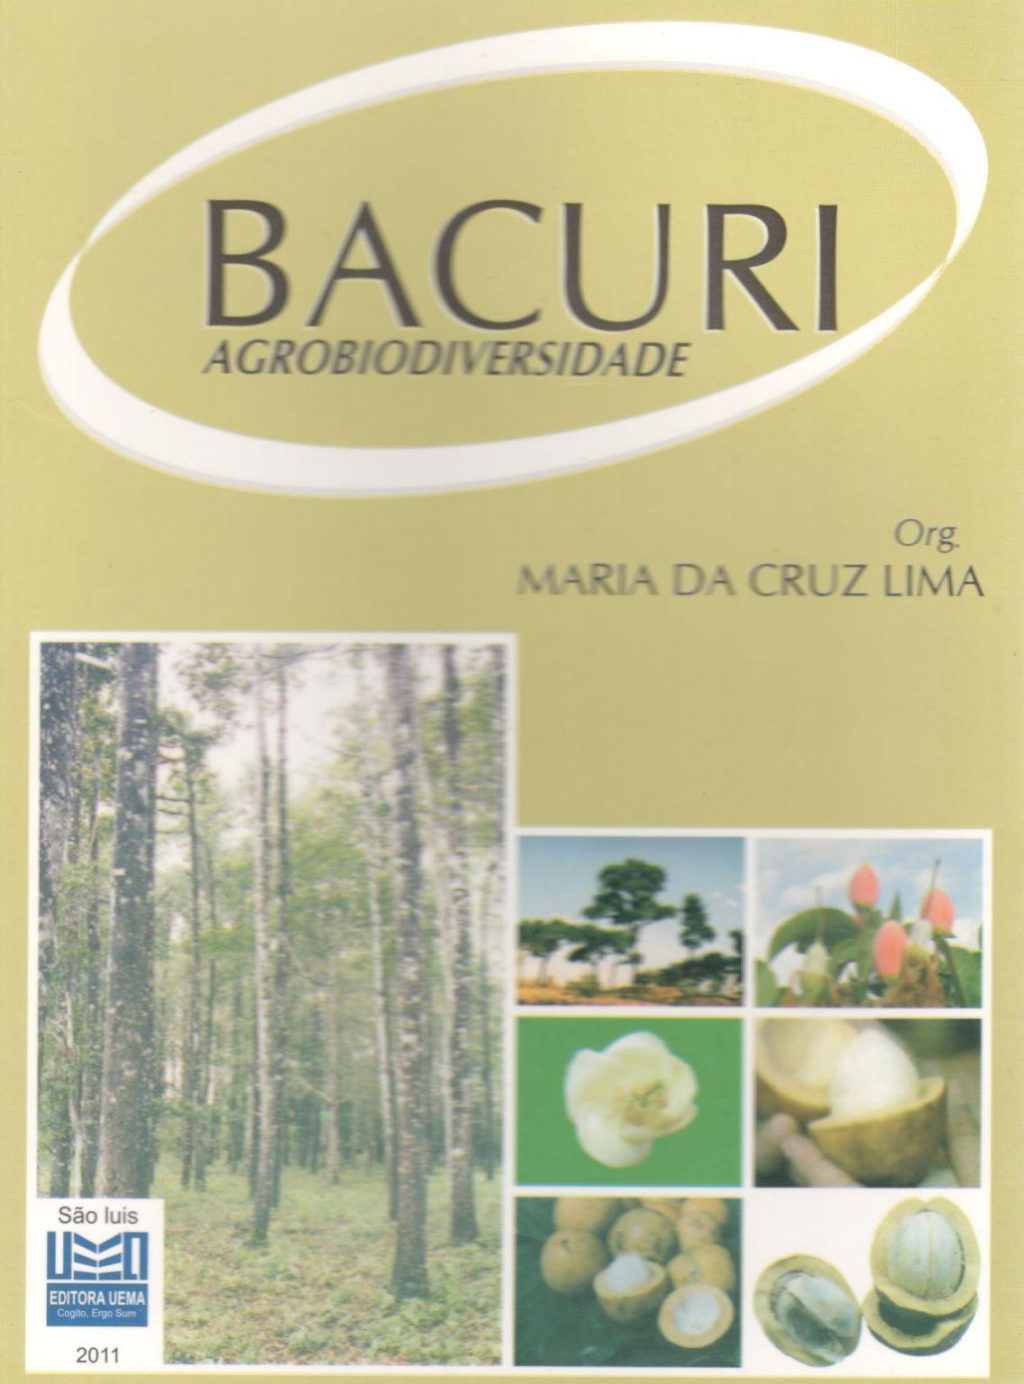 Bacuri agrobiodiversidade (ESGOTADO)